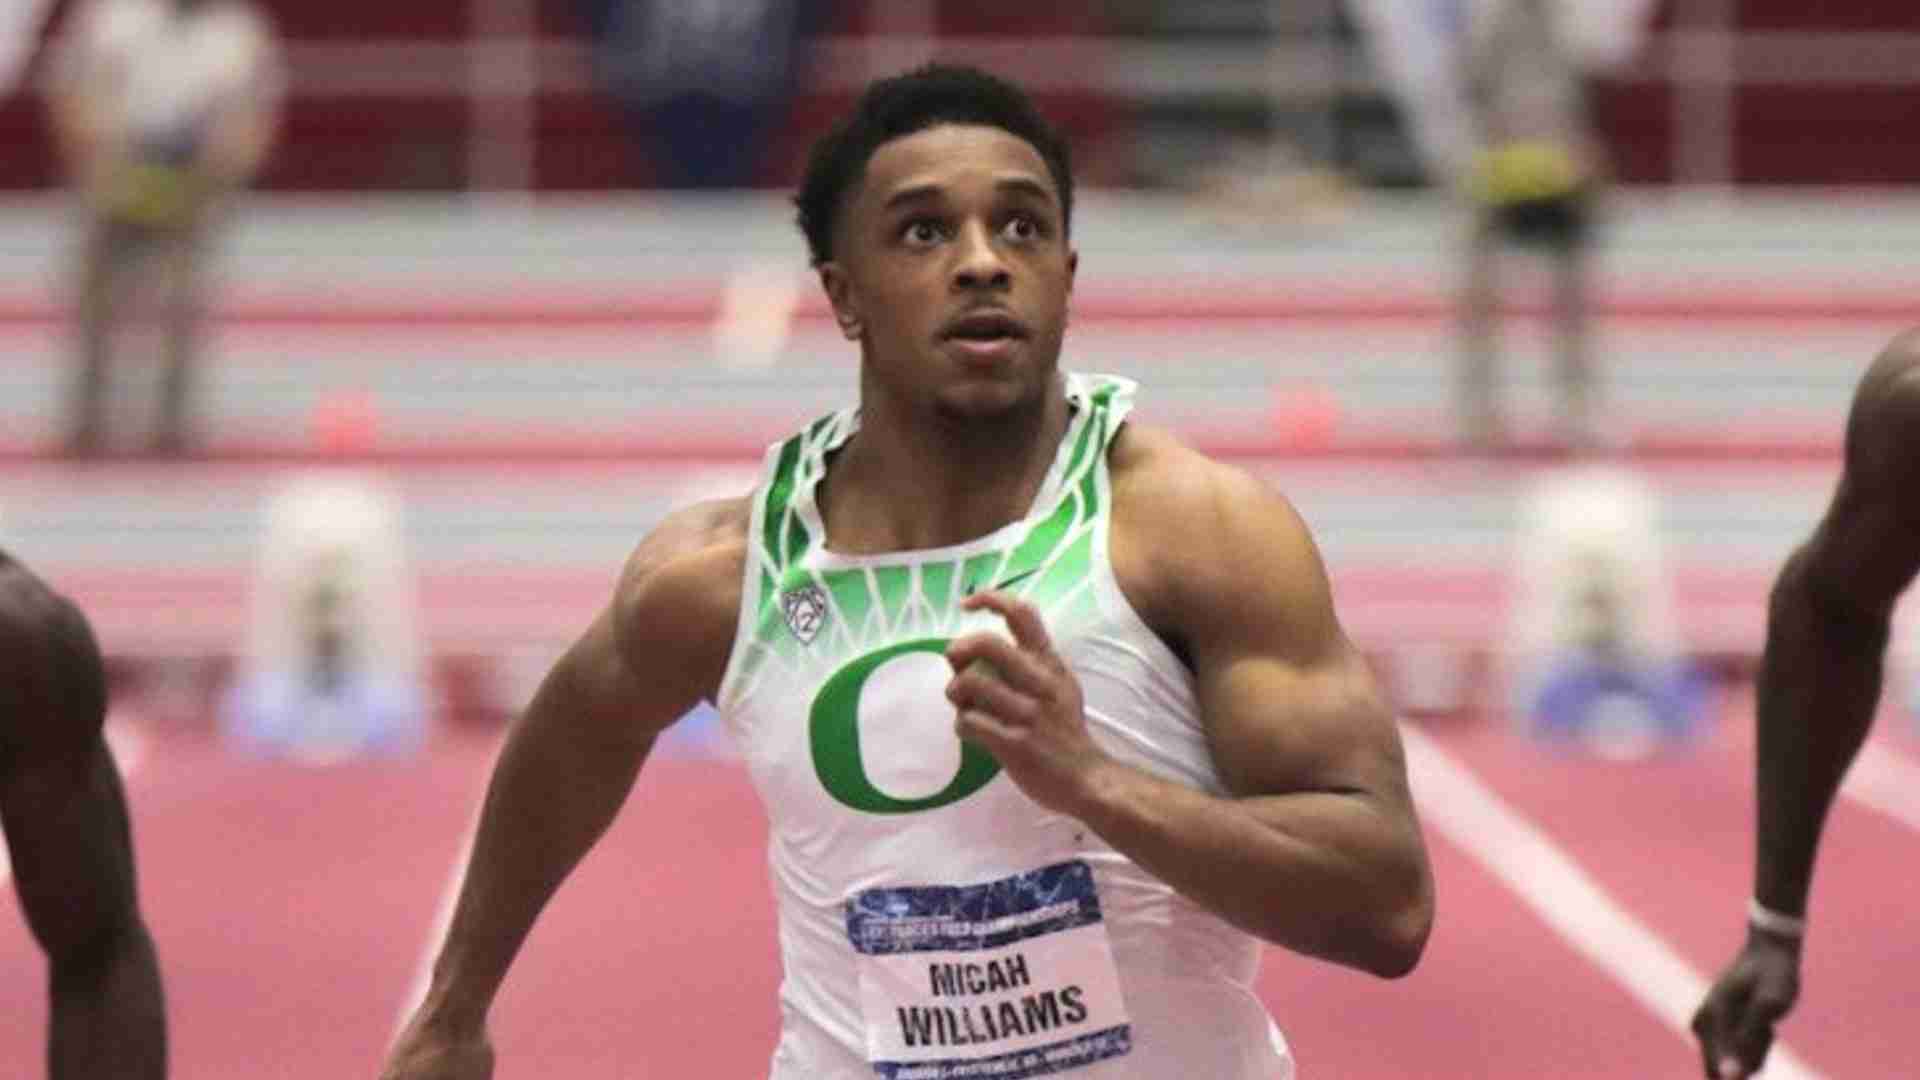 VIDEO: Oregon’s Micah Williams Wins NCAA Indoor Championships Men’s 60m Title